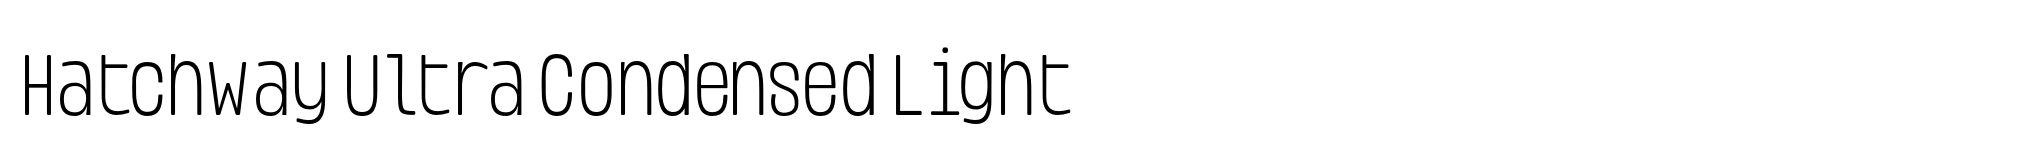 Hatchway Ultra Condensed Light image